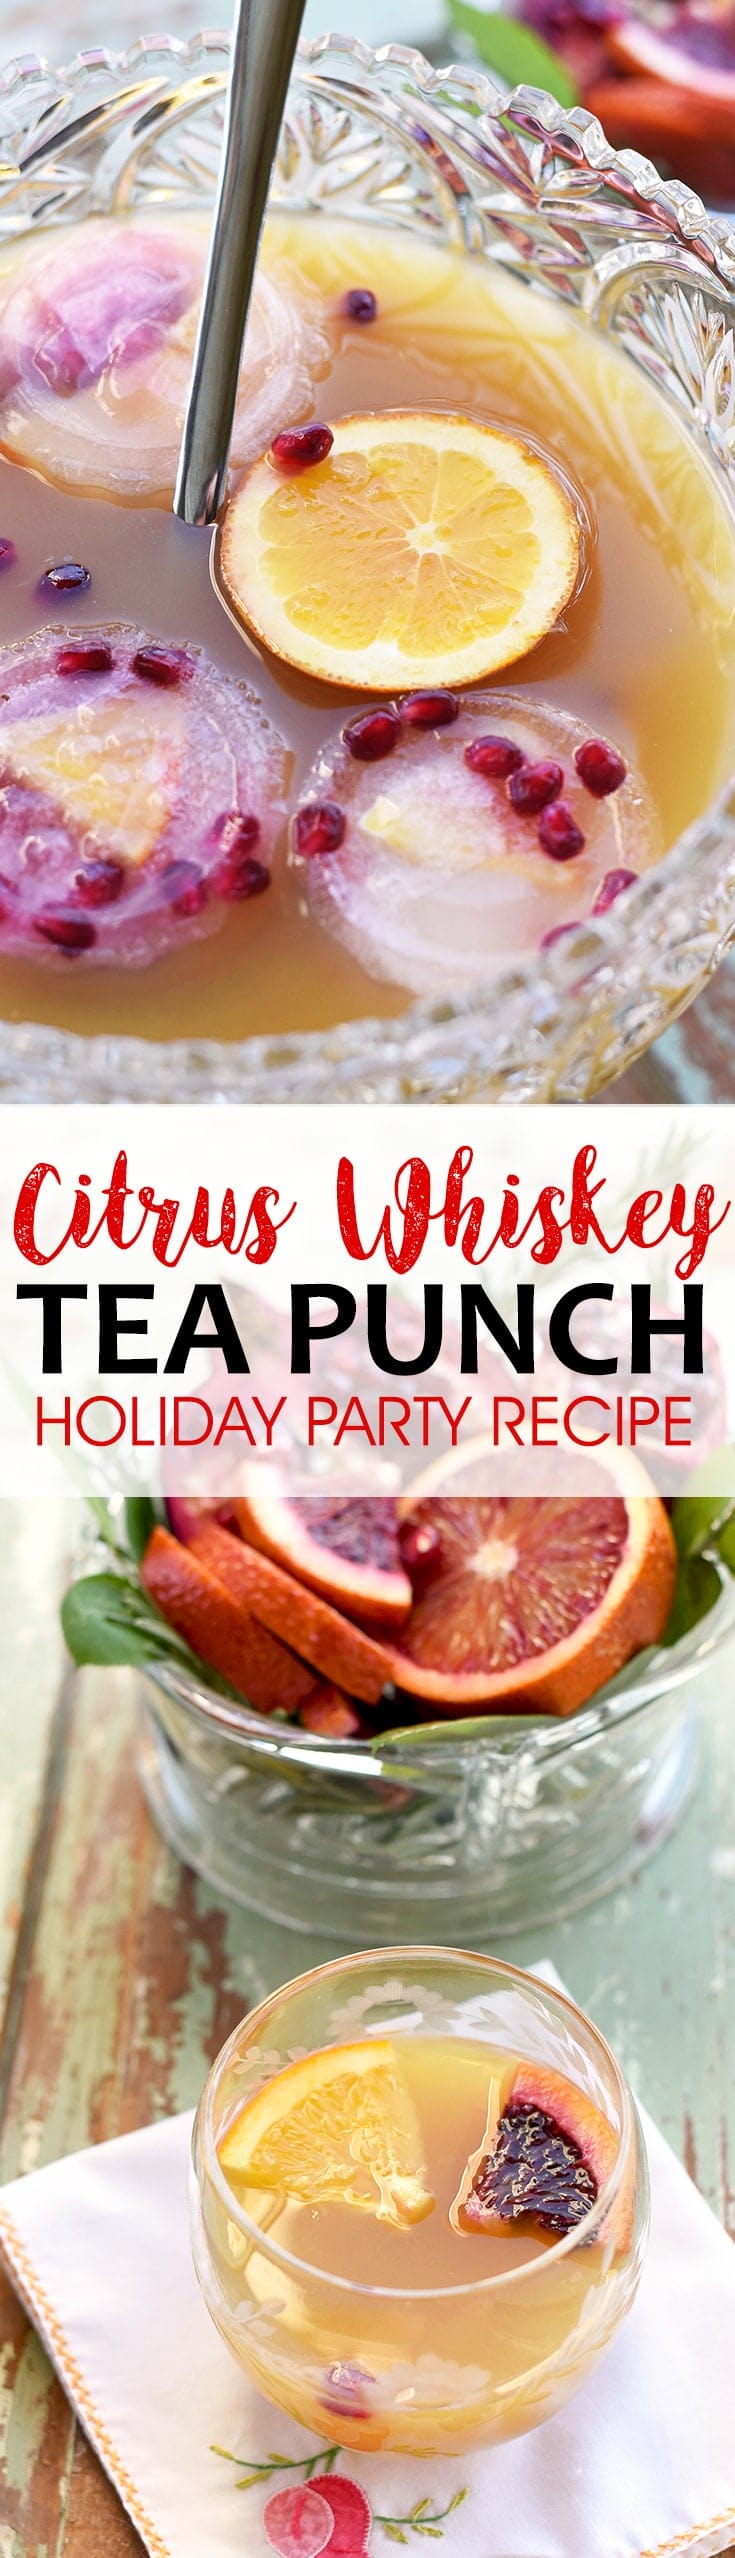 Tea Punch Pin - Citrus Whiskey Tea Punch